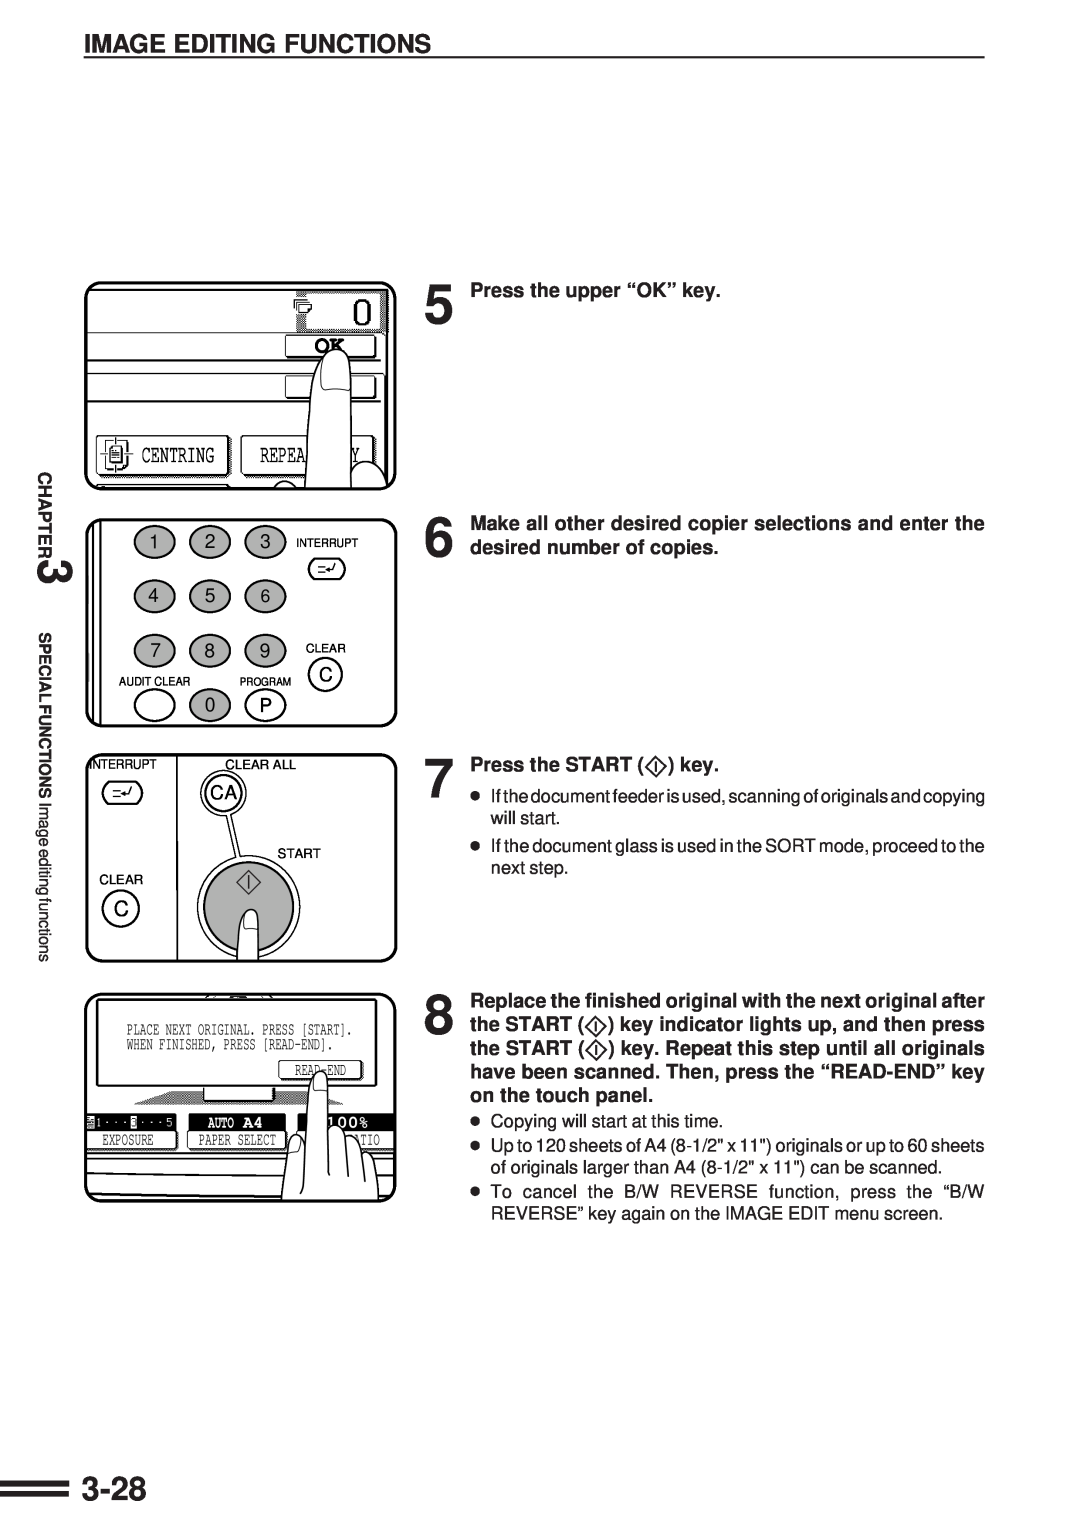 Sharp AR-507 operation manual 3-28, Image Editing Functions, Ok Ok, Centring, Press the upper “OK” key, Press the START key 